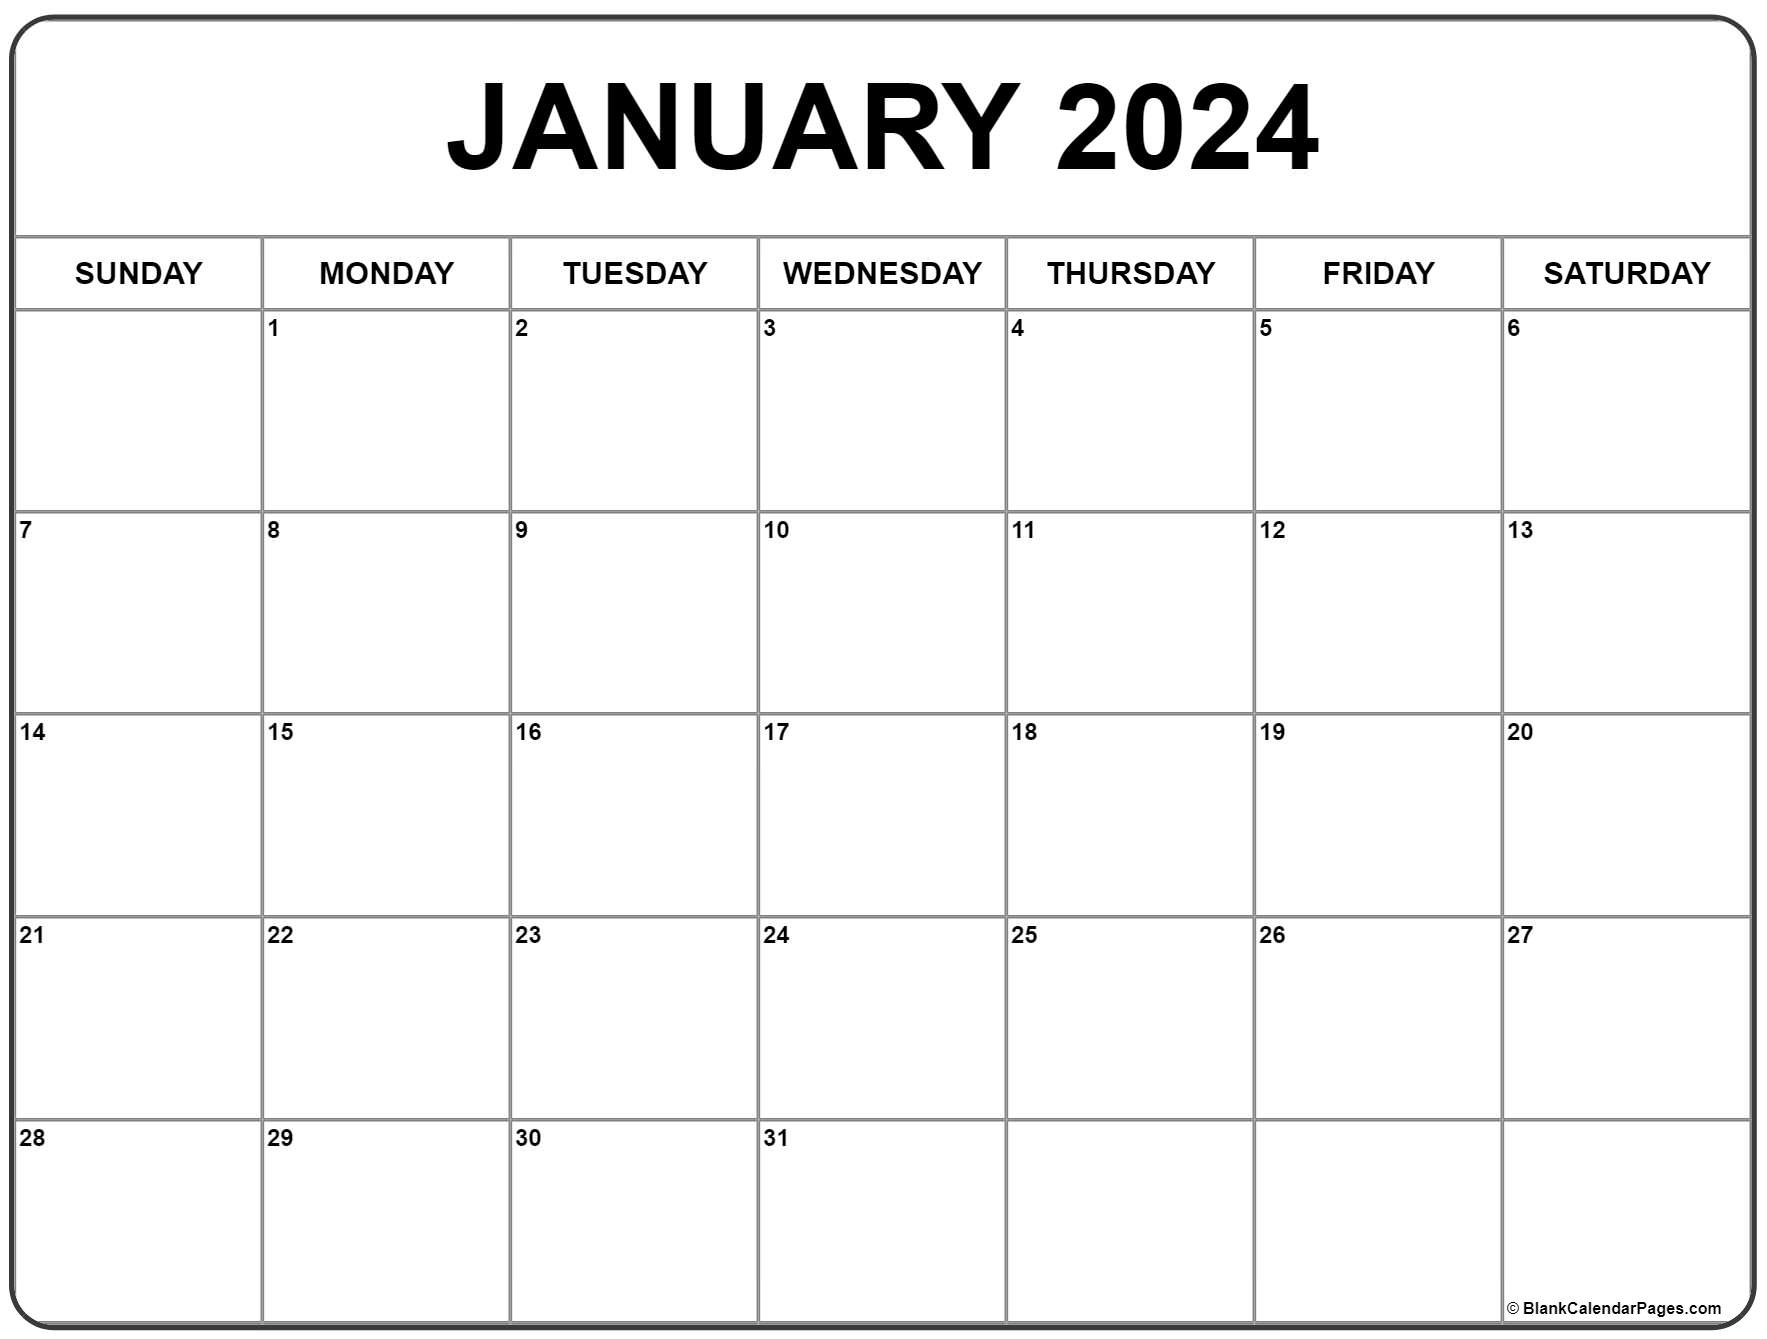 January 2024 Calendar | Free Printable Calendar for 2024 Calendar By Month Printable